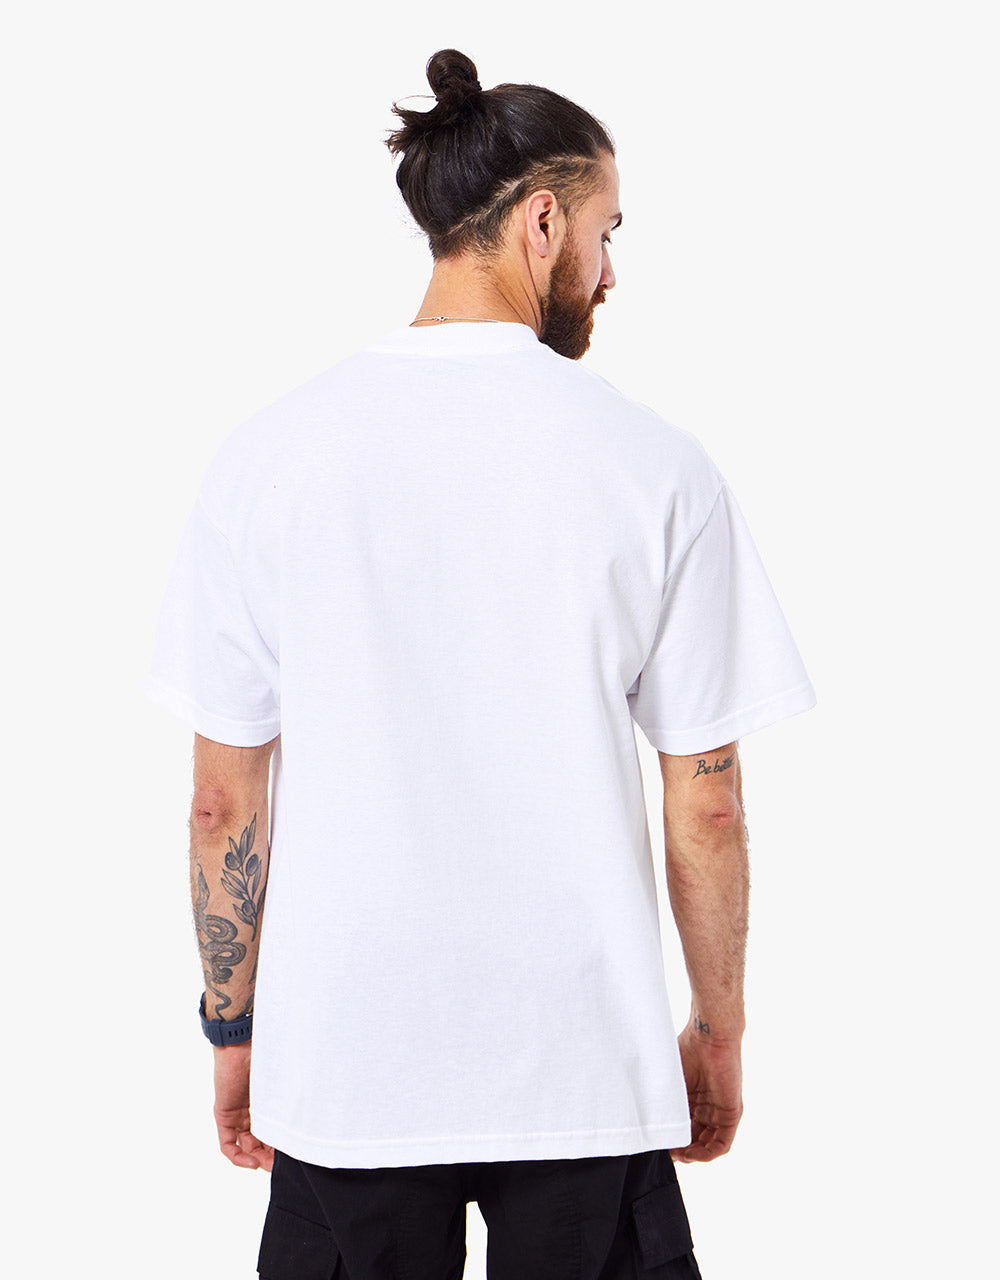 Doom Sayers Lil Kool Homies V2 T-Shirt - White